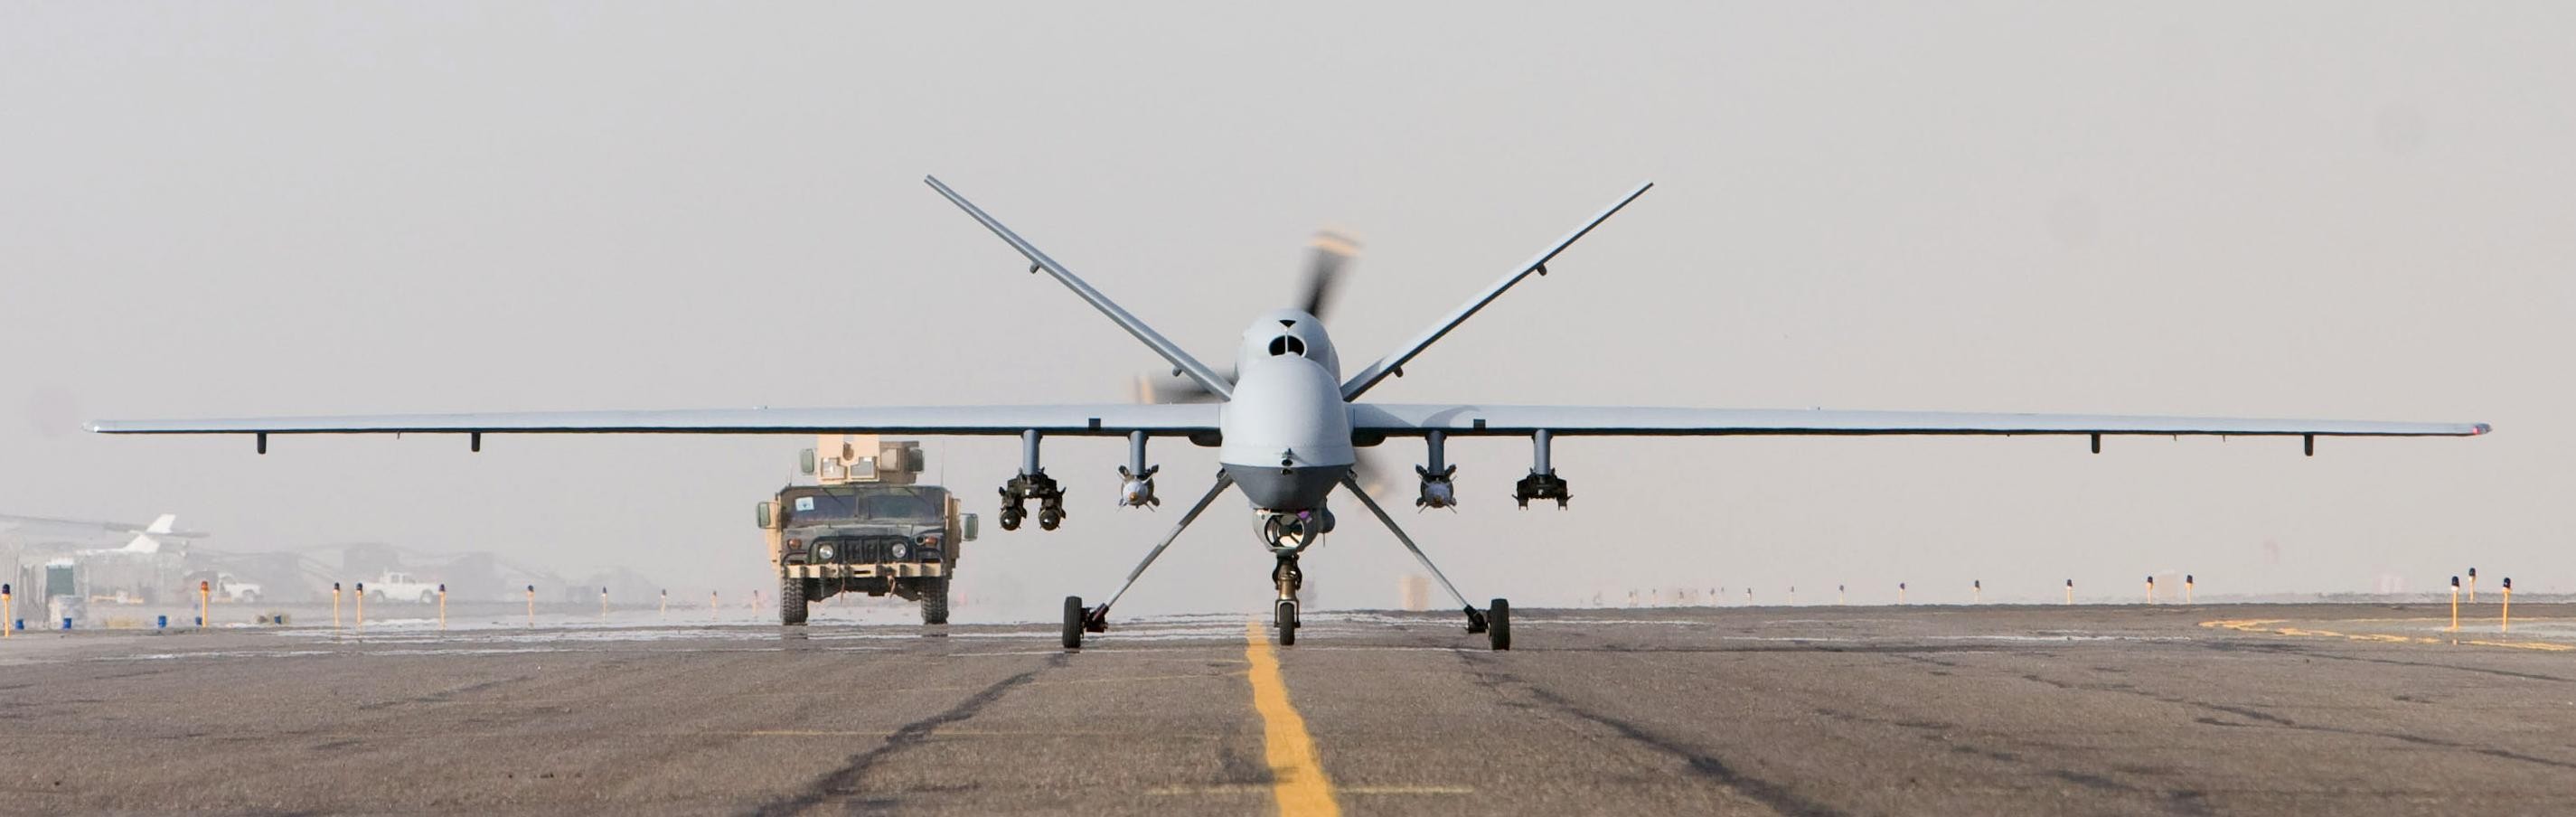 General 2850x904 drone UAVs vehicle aircraft asphalt military MQ-9 Reaper American aircraft truck